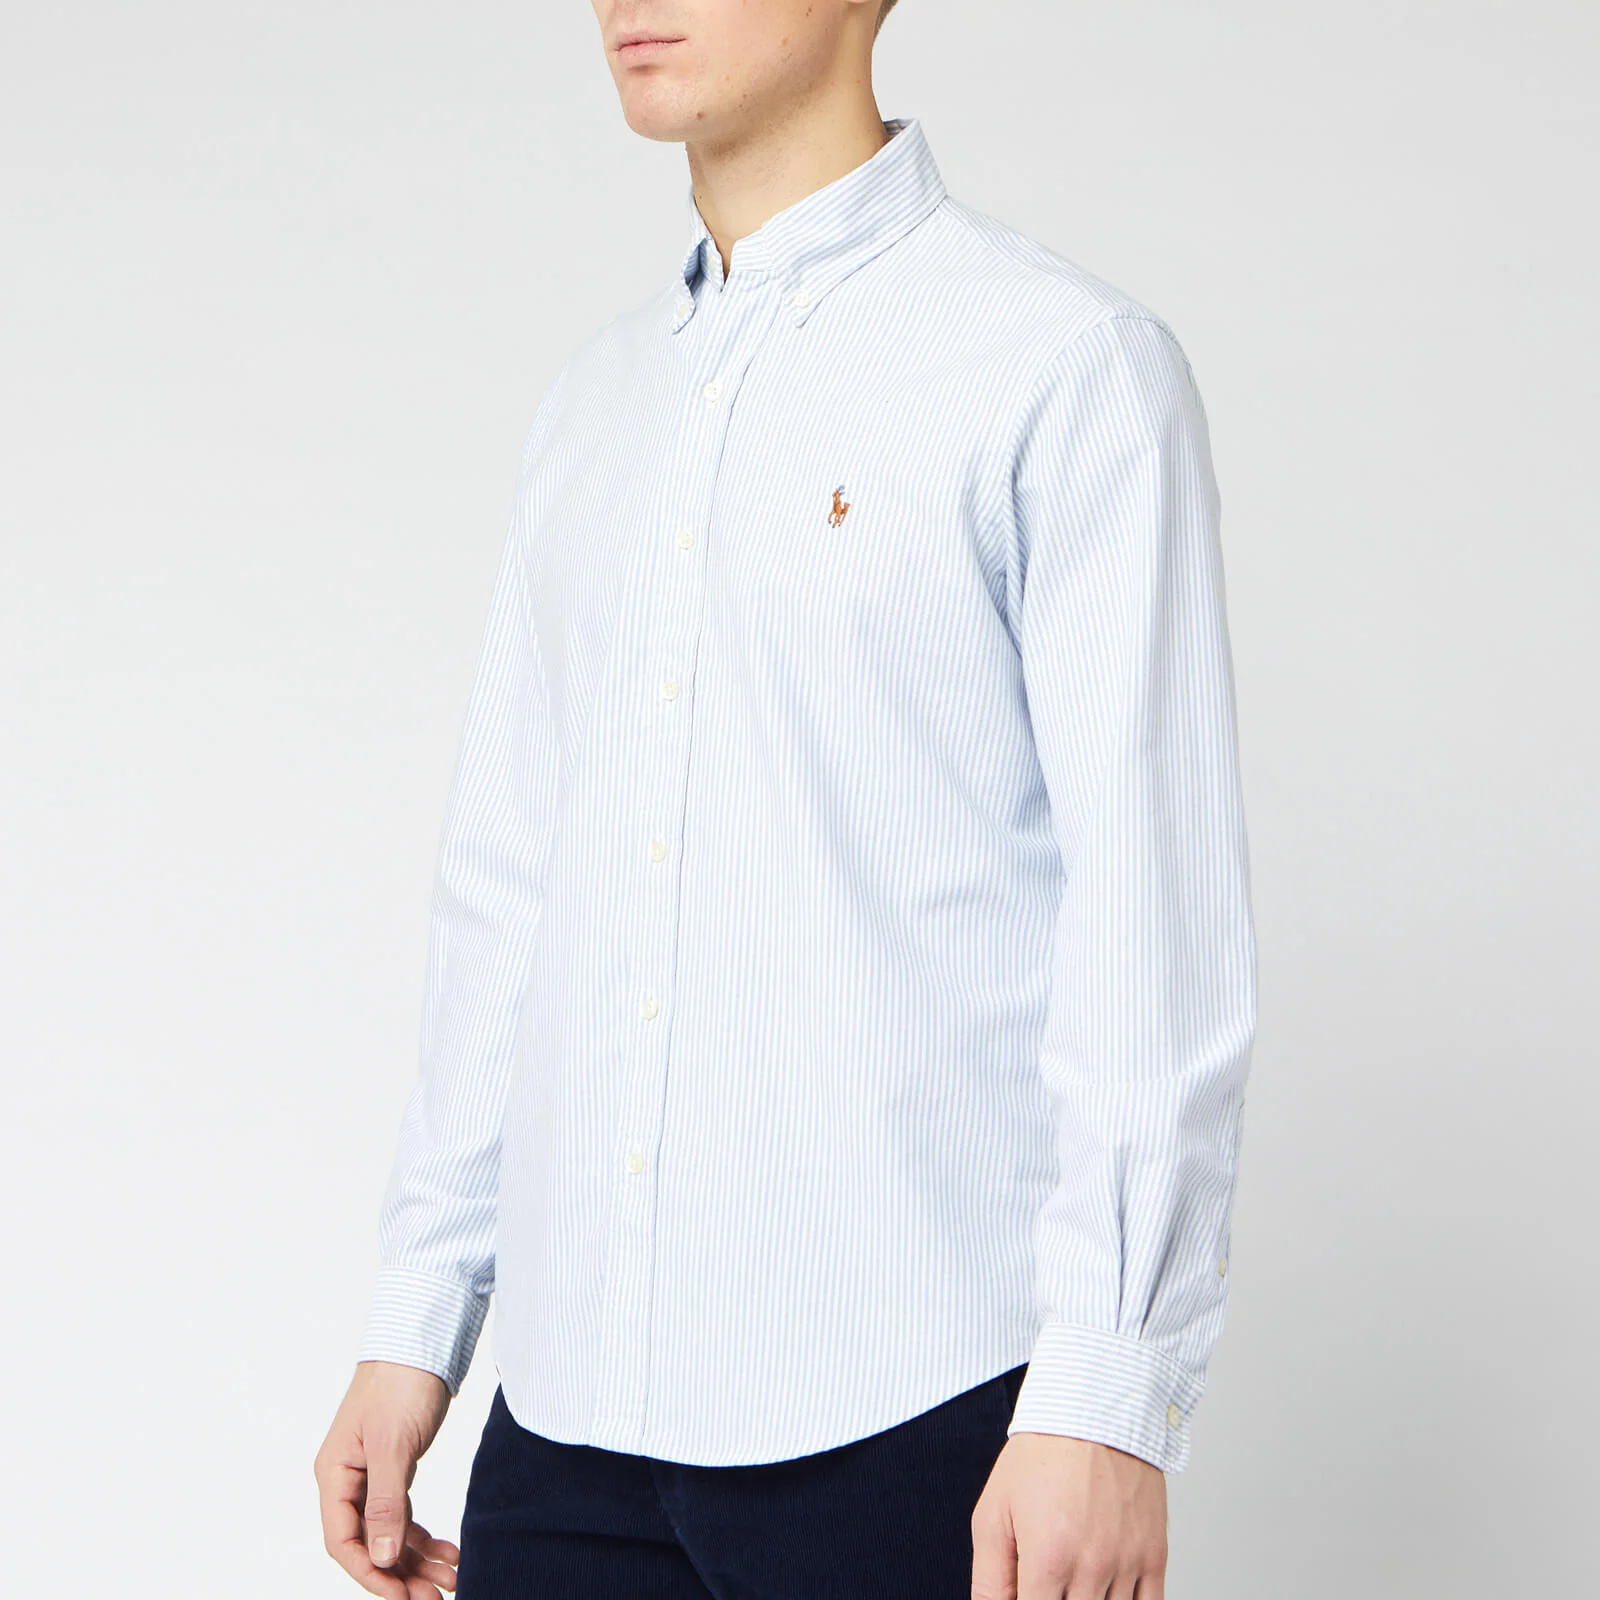 Polo Ralph Lauren Men's Slim Fit Bengal Stripe Oxford Shirt - Blue/White Image 1